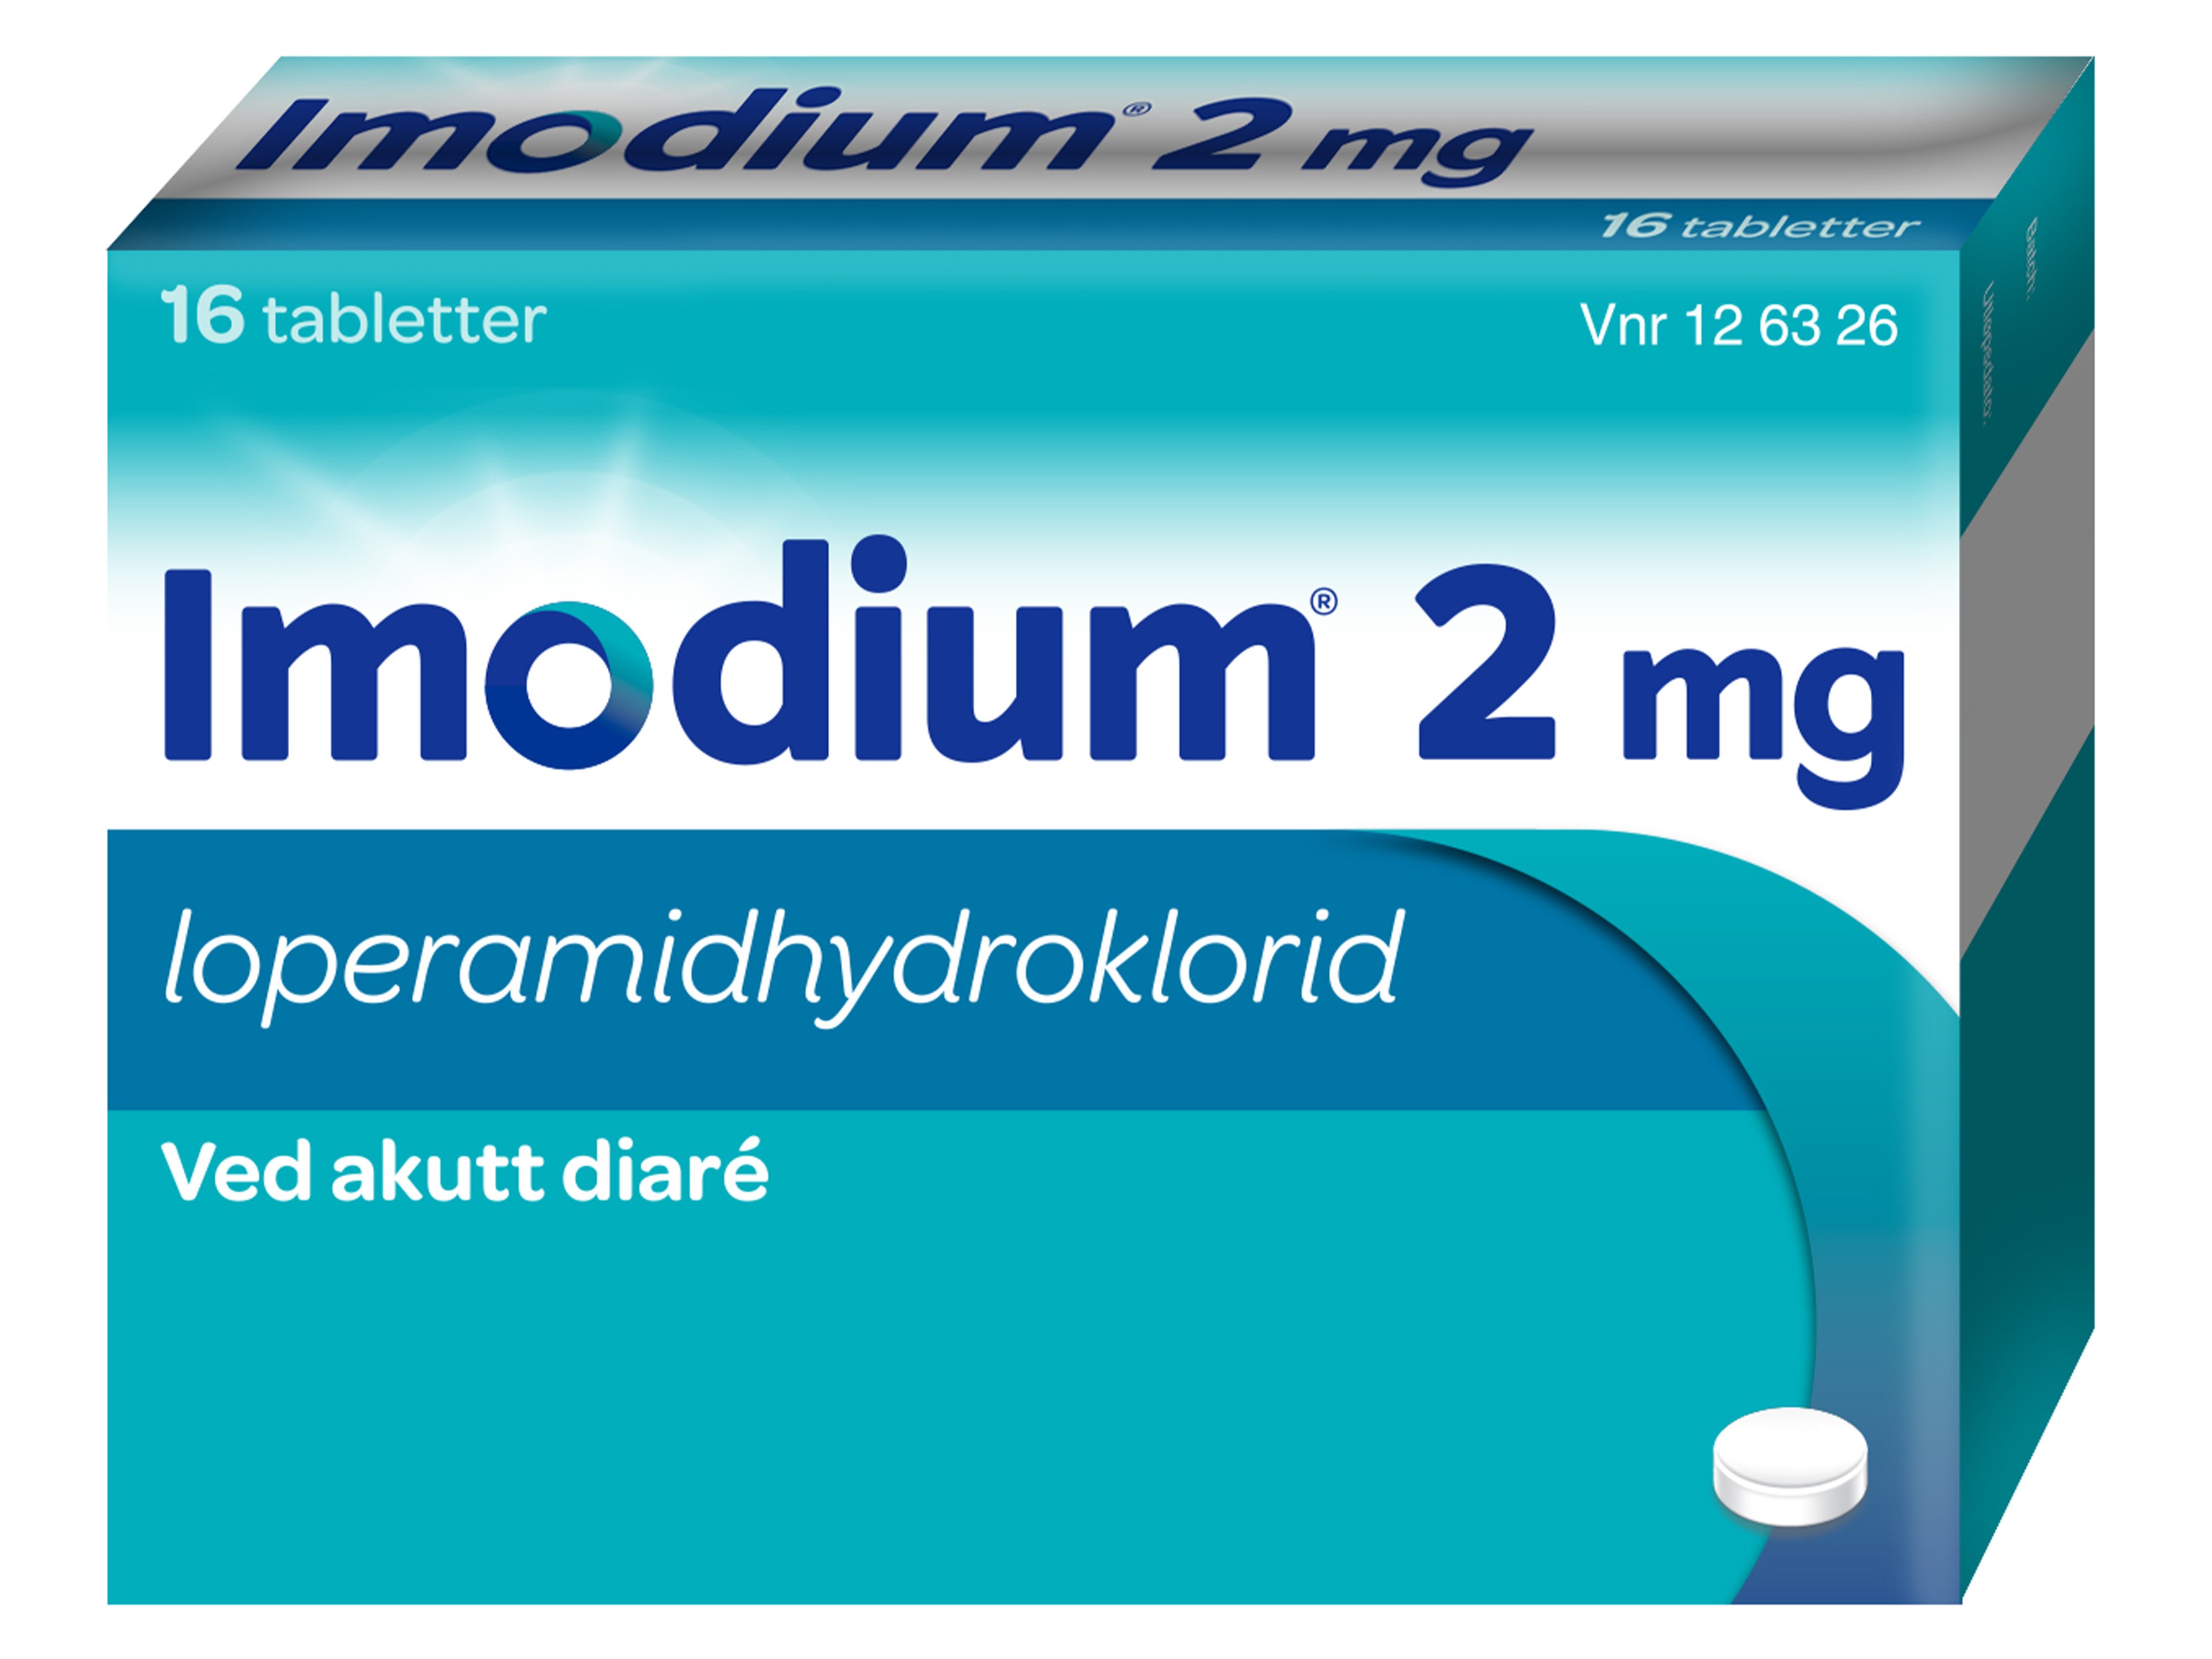 Imodium Tabletter 2mg, 16 stk.